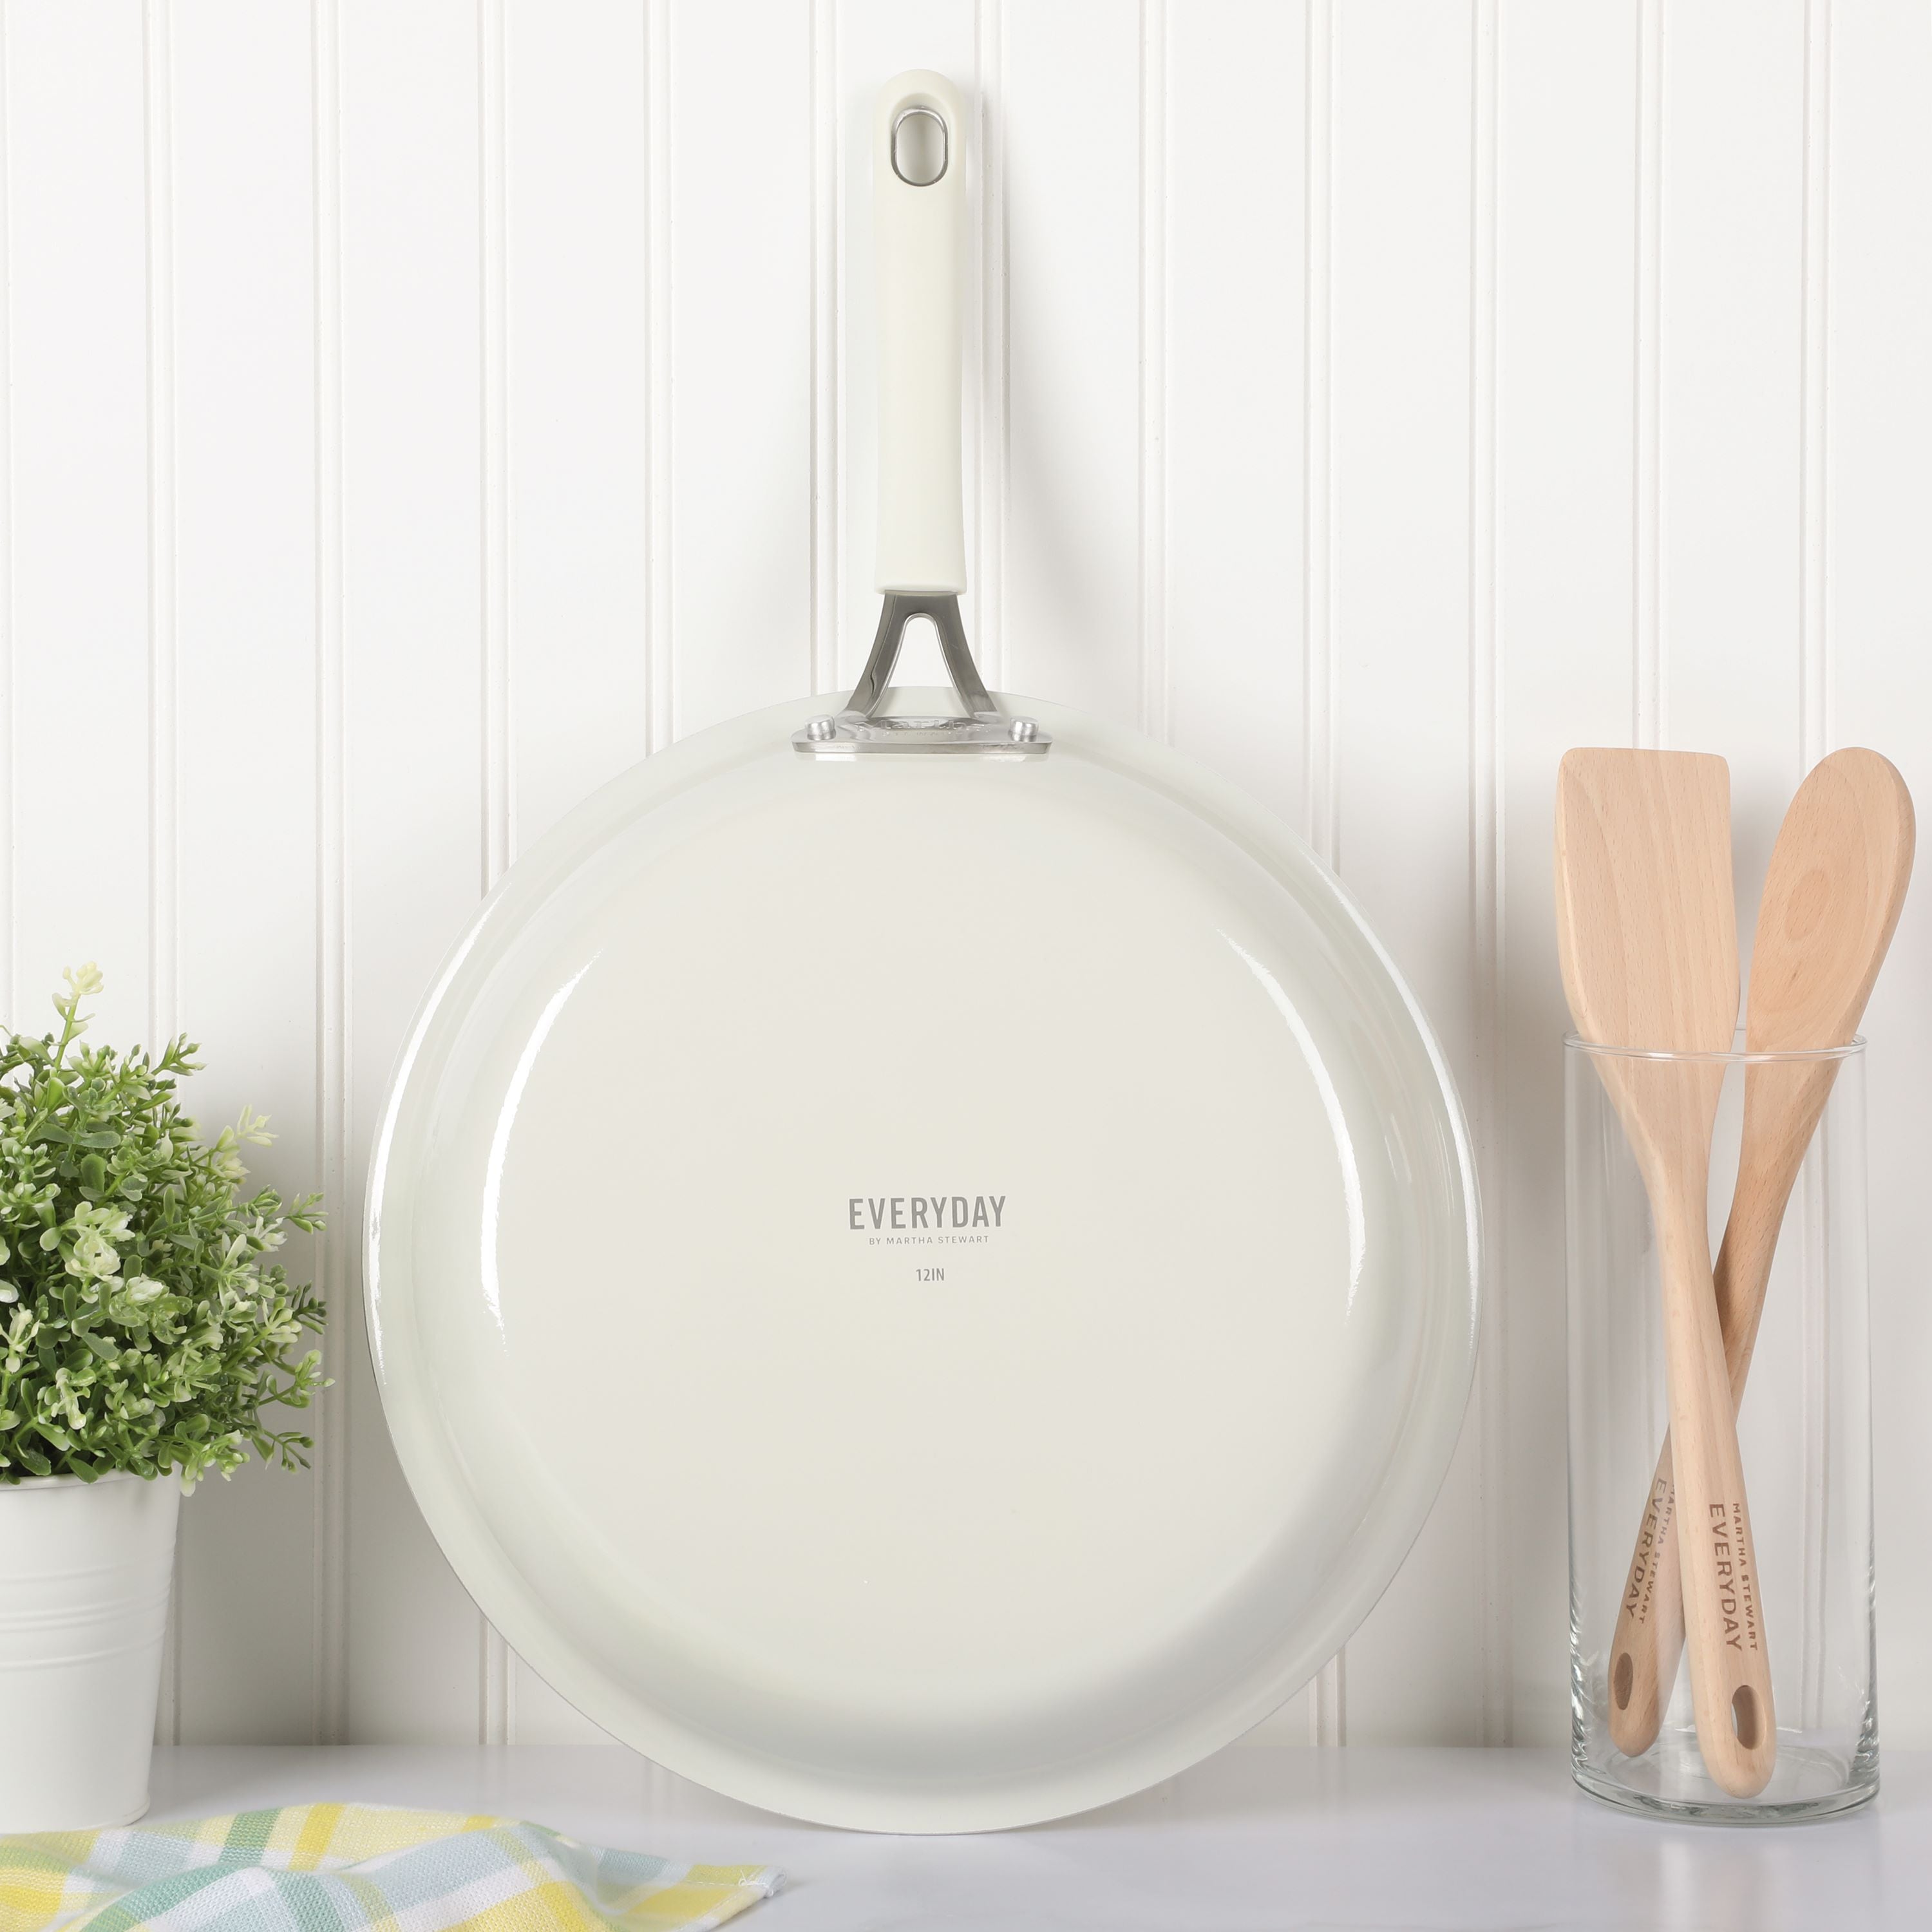 Martha Stewart debuts new premium cookware - Home Furnishings News